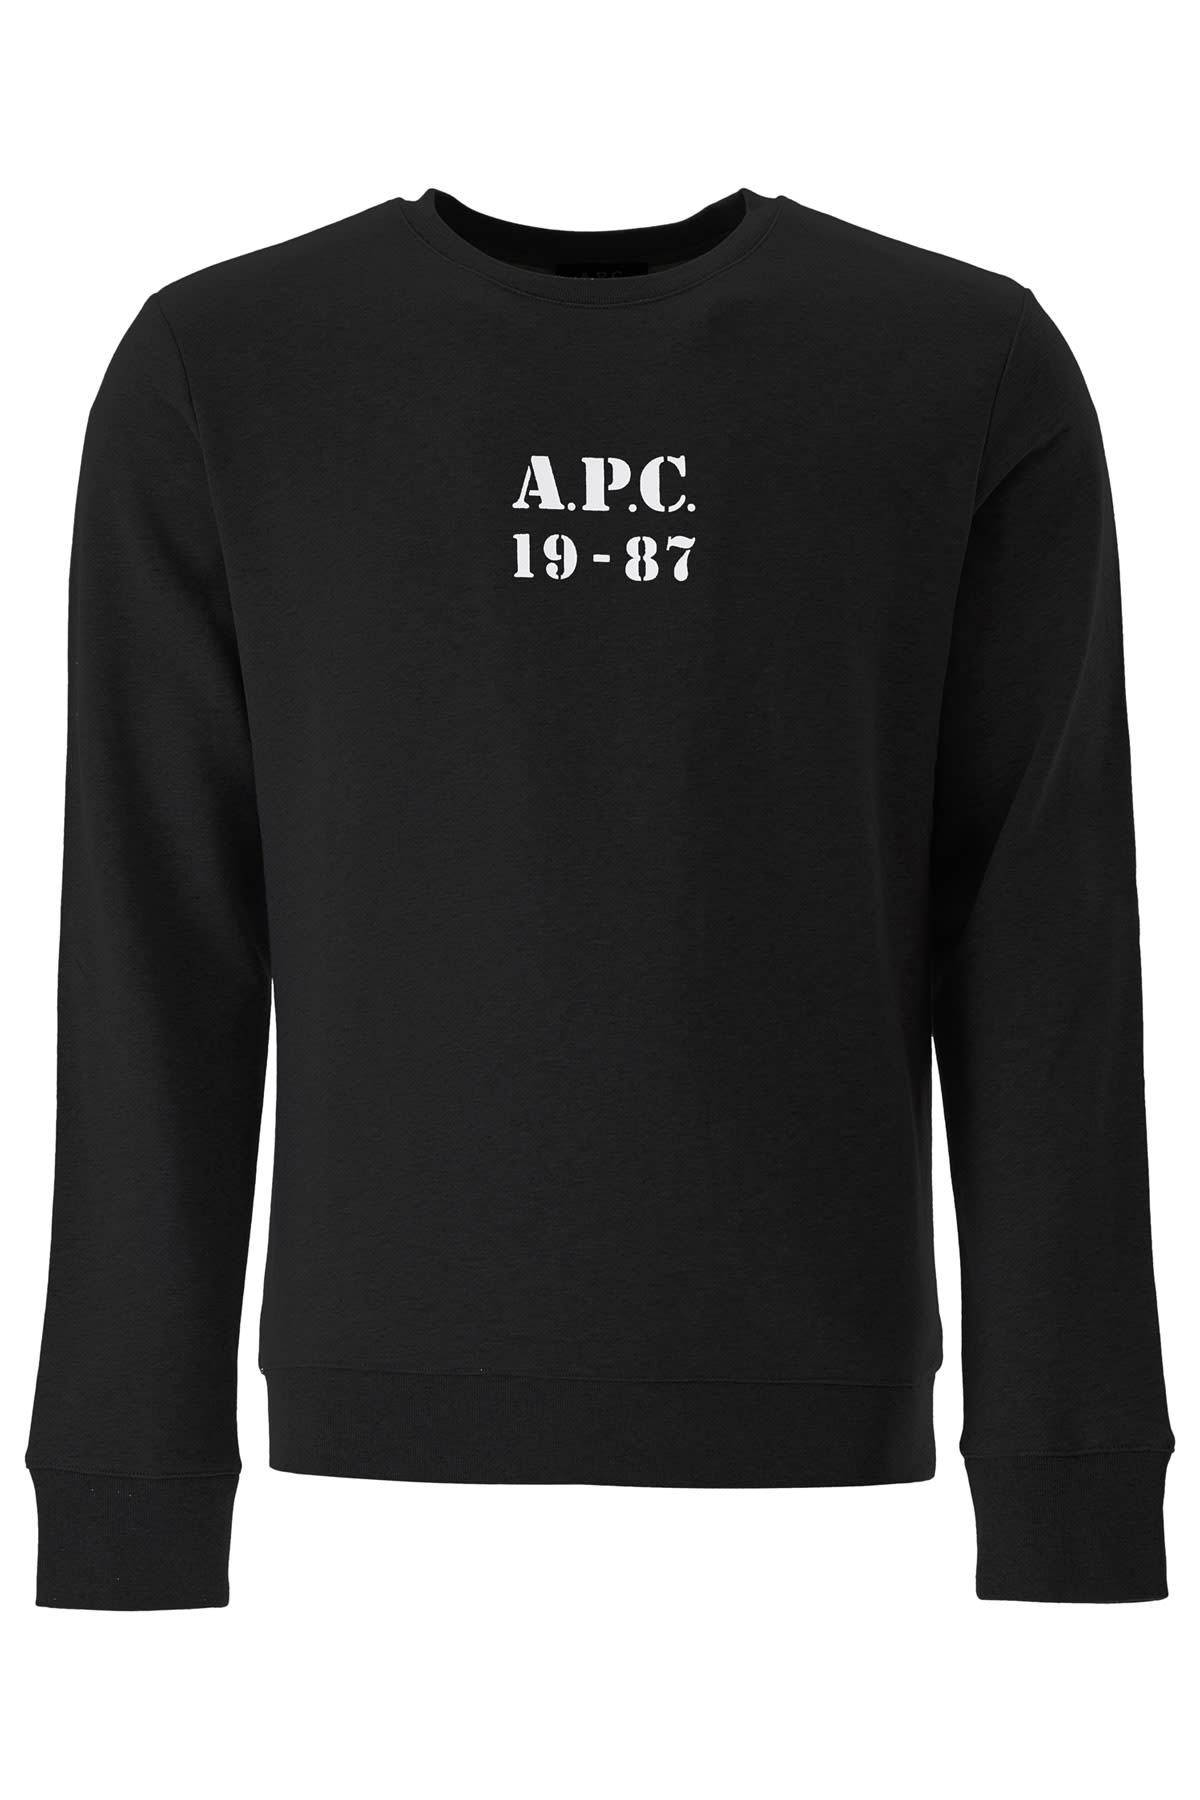 Apc 19-87 Sweatshirt In Black